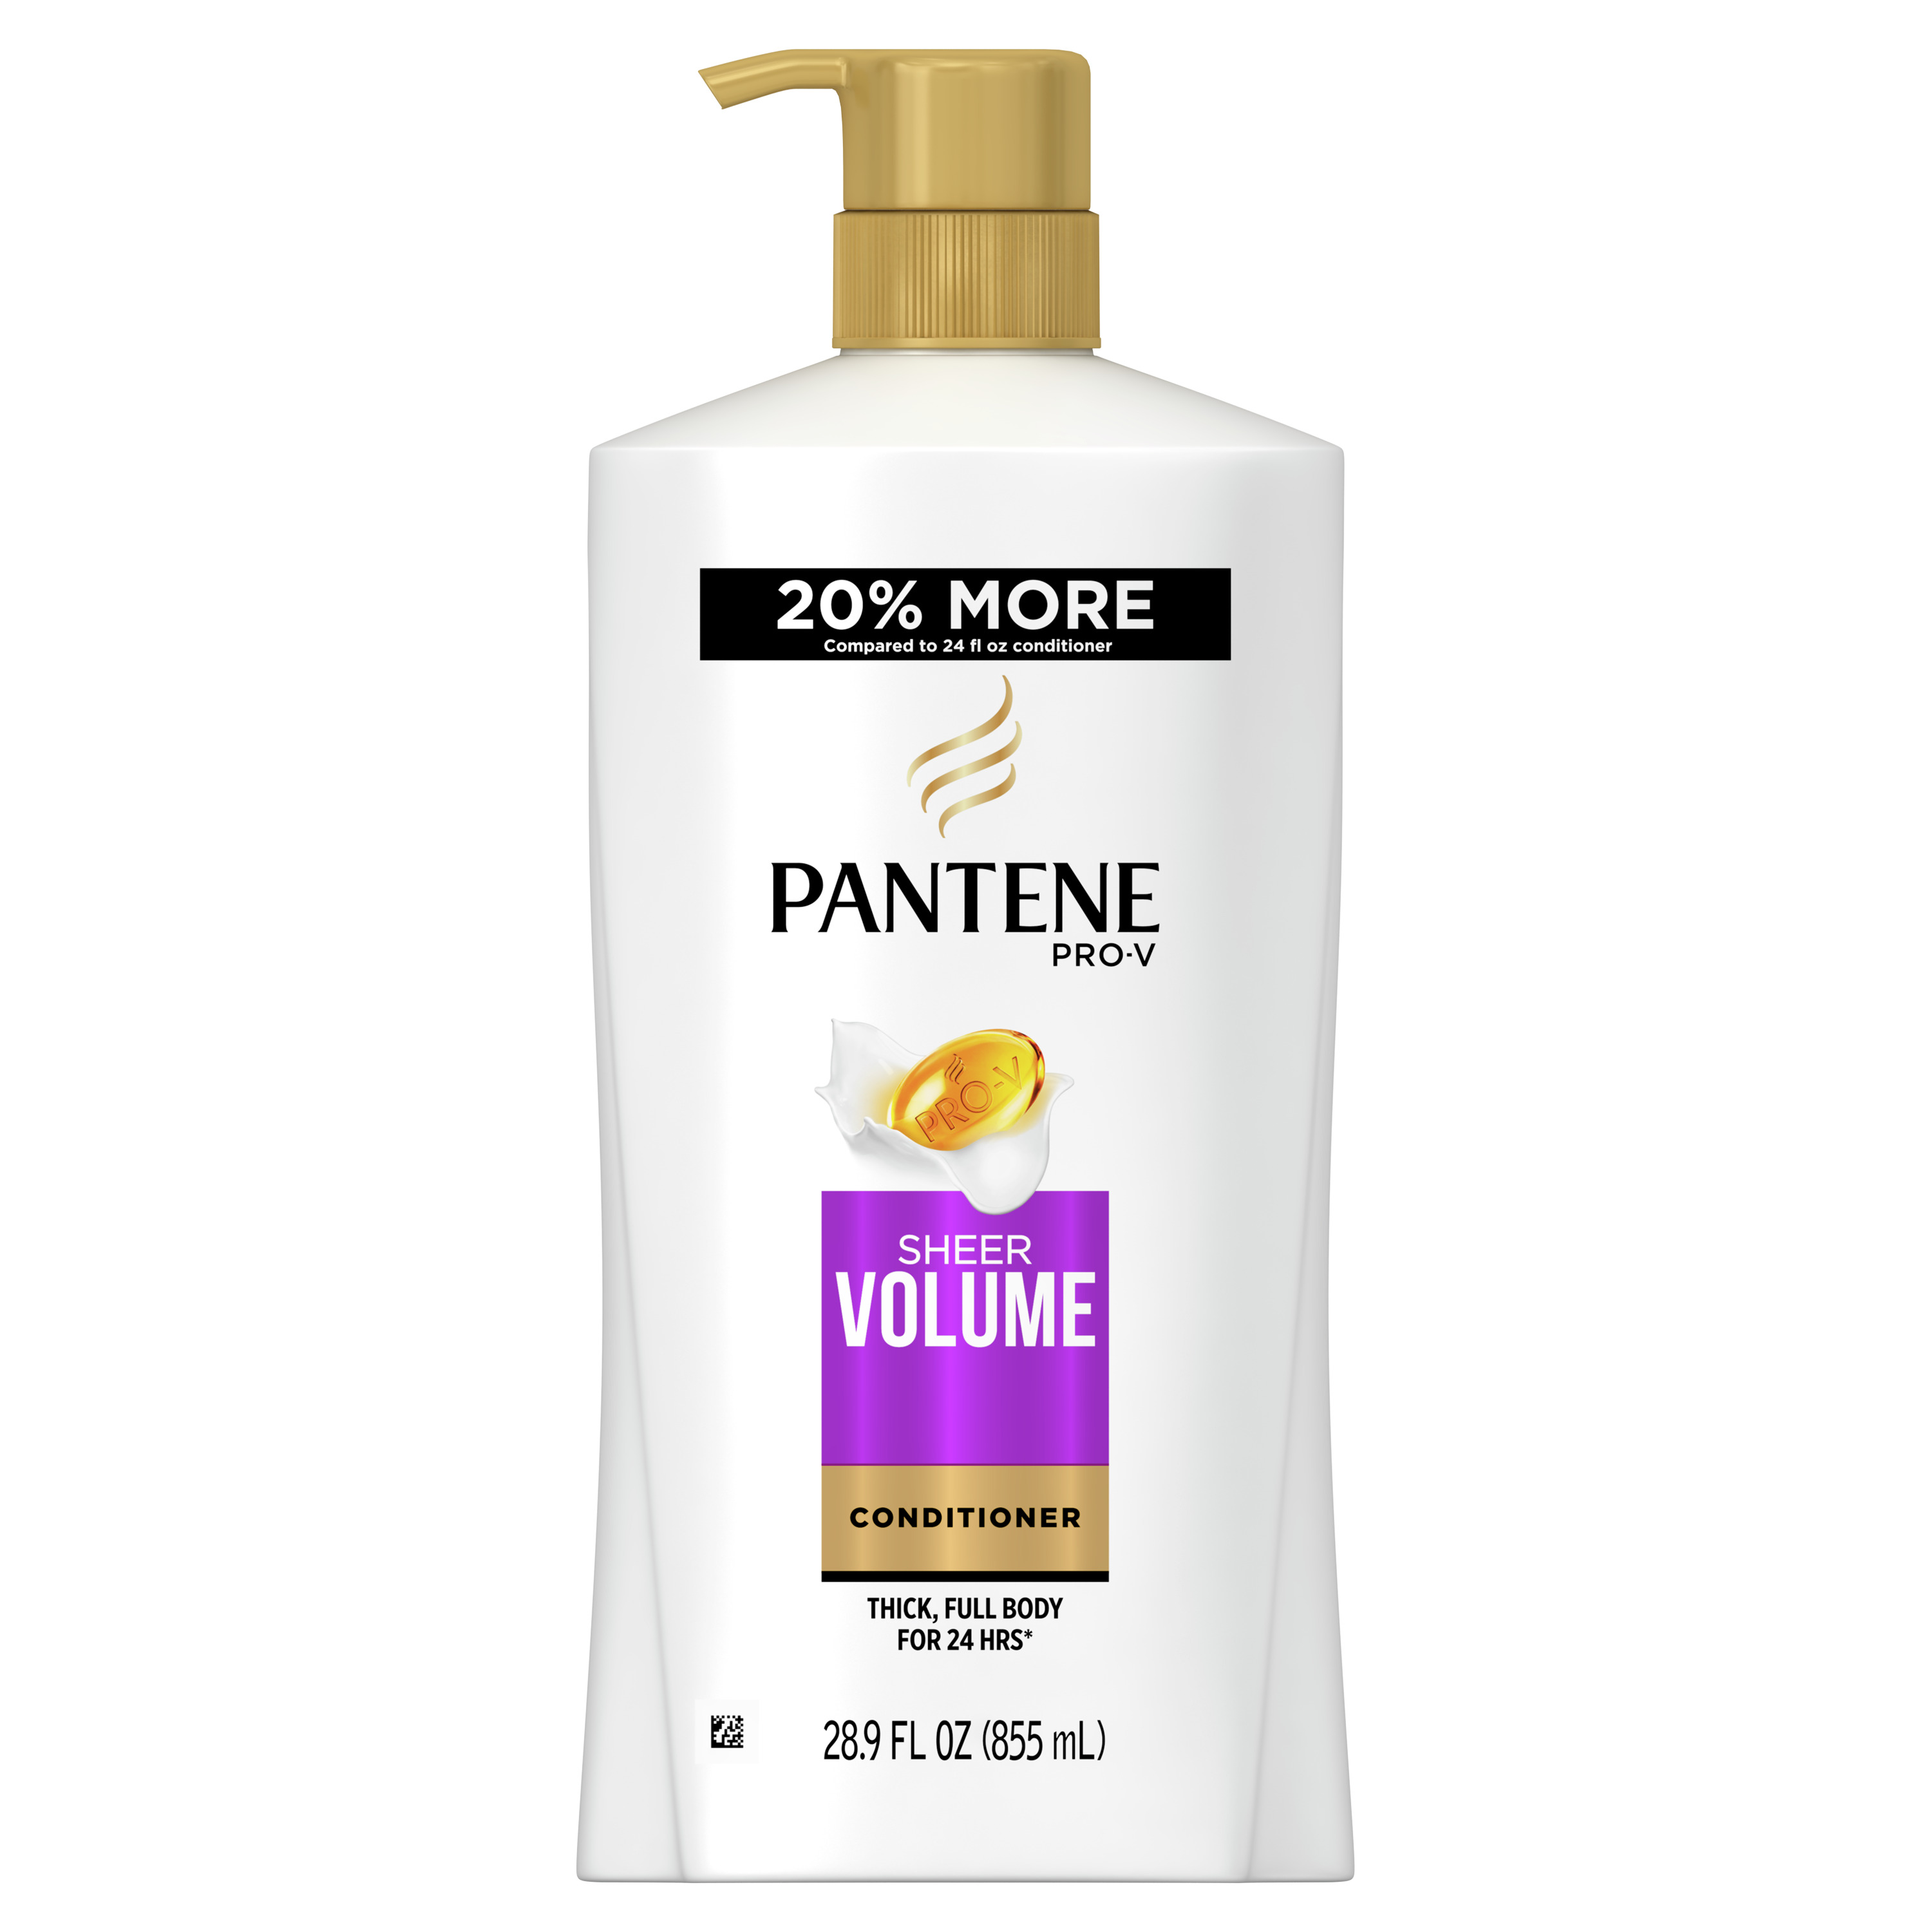 Pantene Pro-V Moisturizing nourishing Sheer Volume for Thin Hair Daily Conditioner, 28.9 fl oz - image 1 of 7